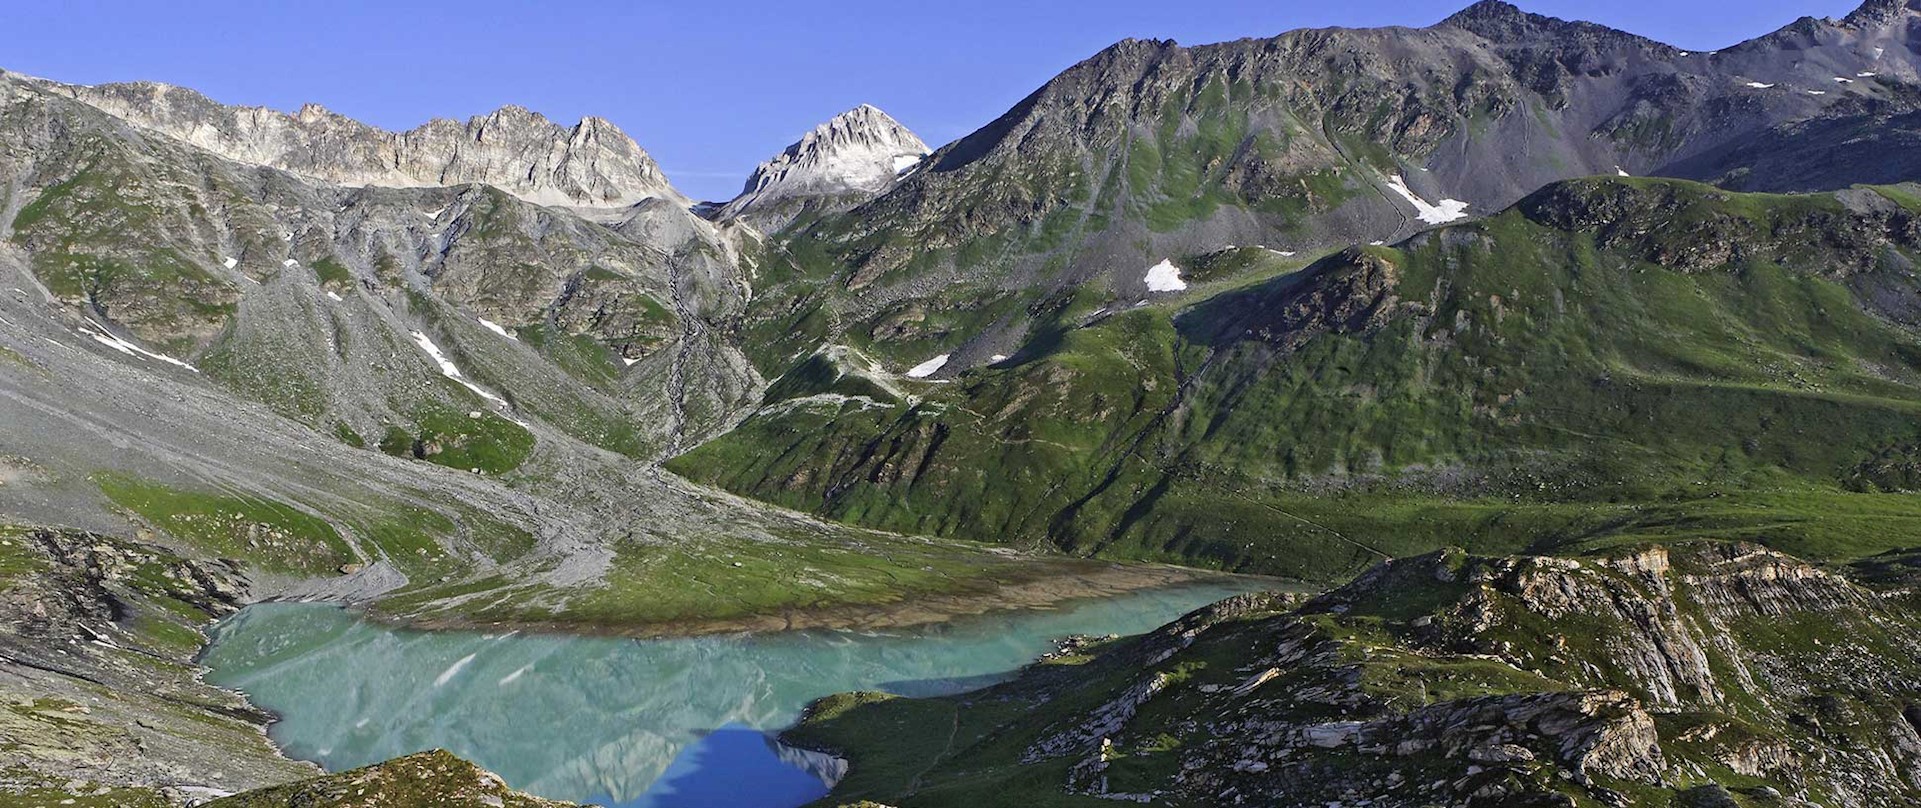 Massif de la Vanoise, lac blanc. © Patrice HAUSER / HEMIS